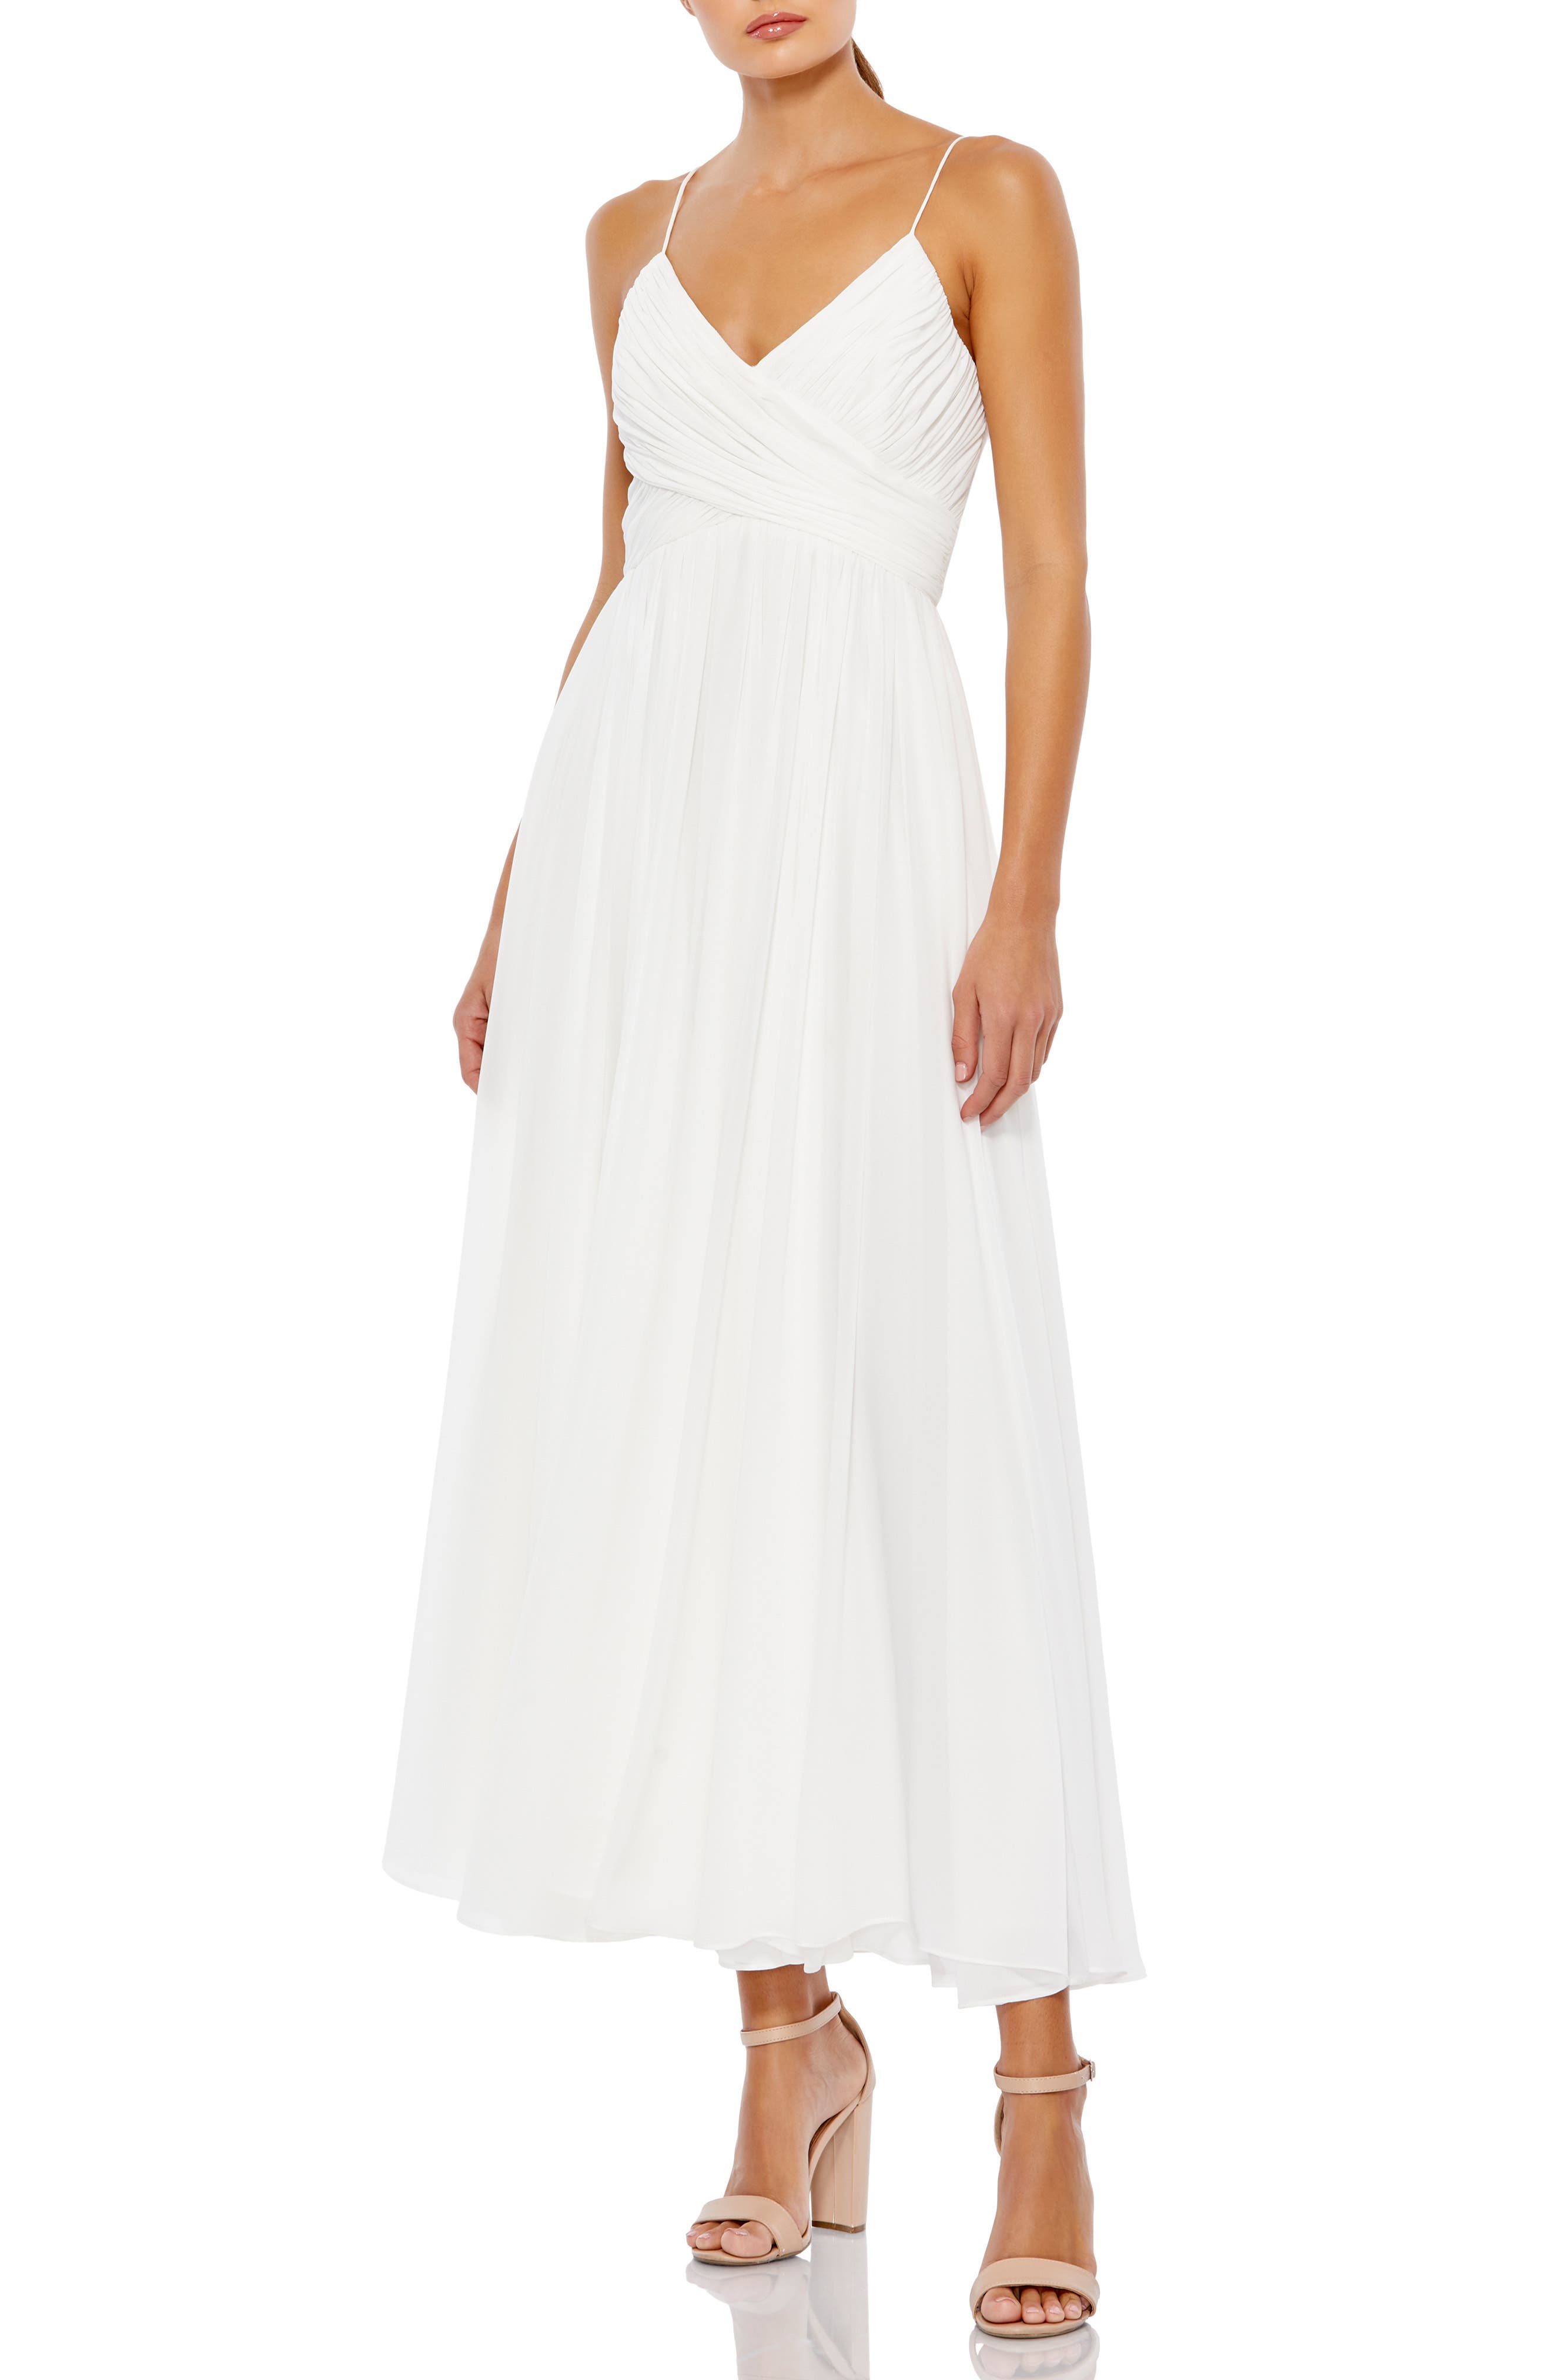 White Cocktail Dresses ☀ Party Dresses ...